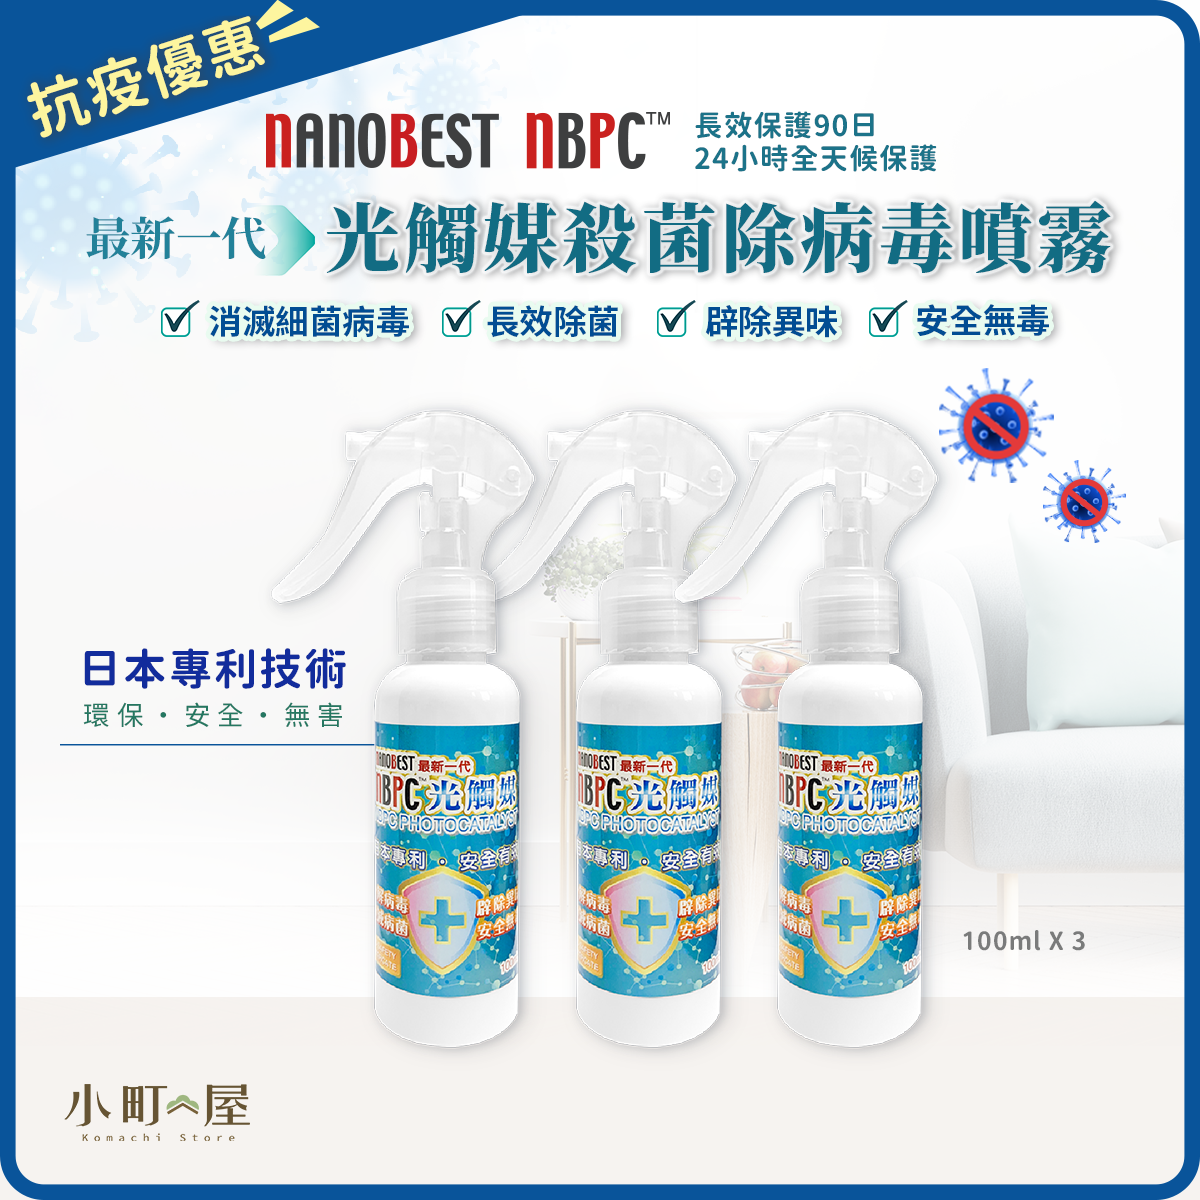 SALE: Japan Patented Technology | Latest Generation Light | Catalyst Sanitizing Spray 100ml X 3